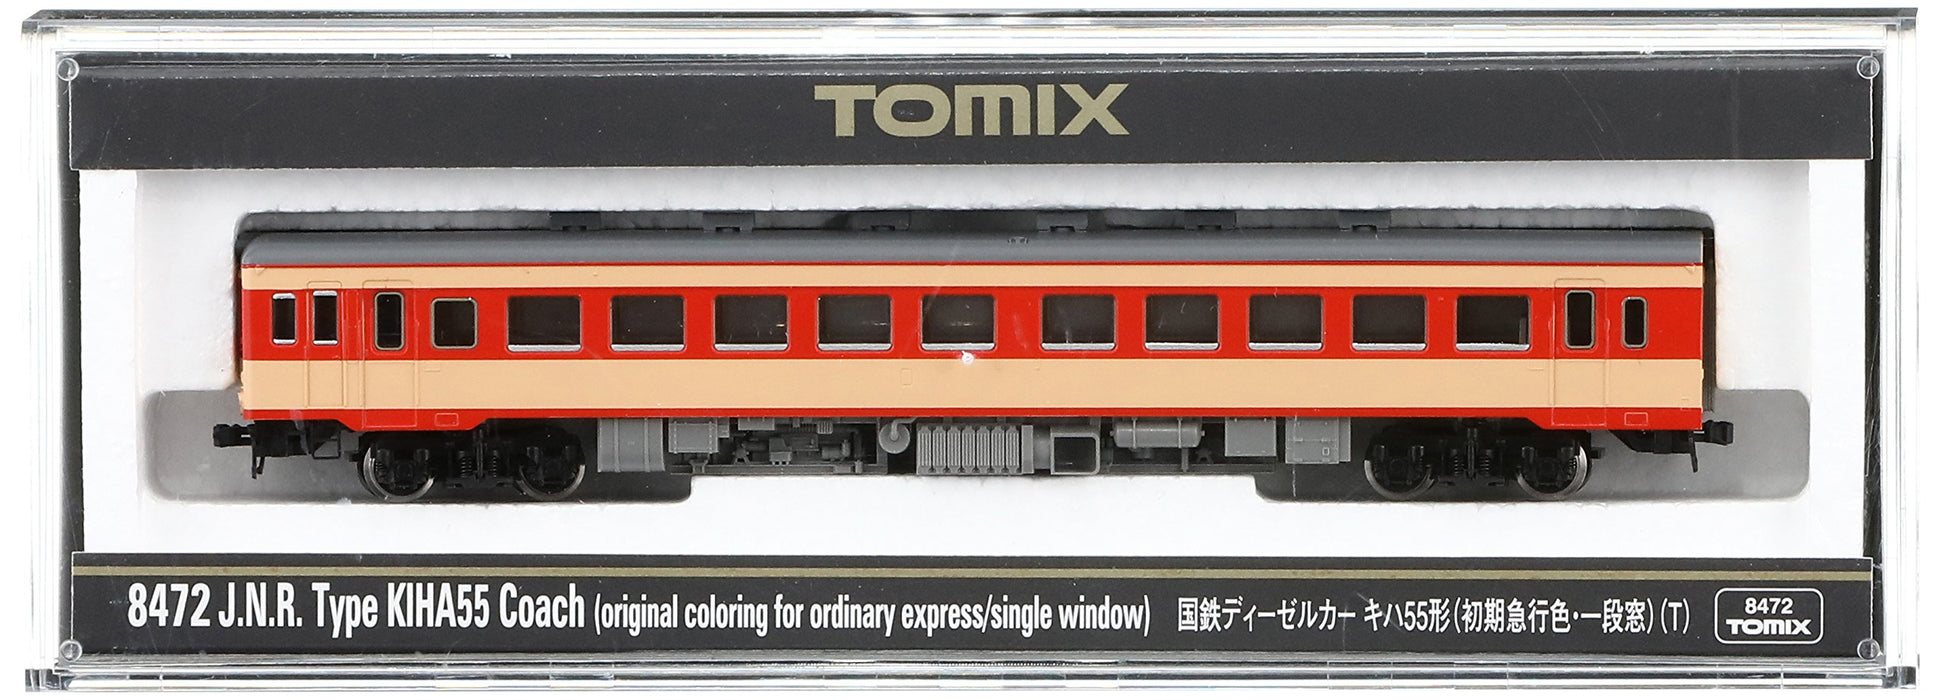 Tomytec Tomix Kiha55 Early Express Single Window N Gauge Diesel Railway Model Car